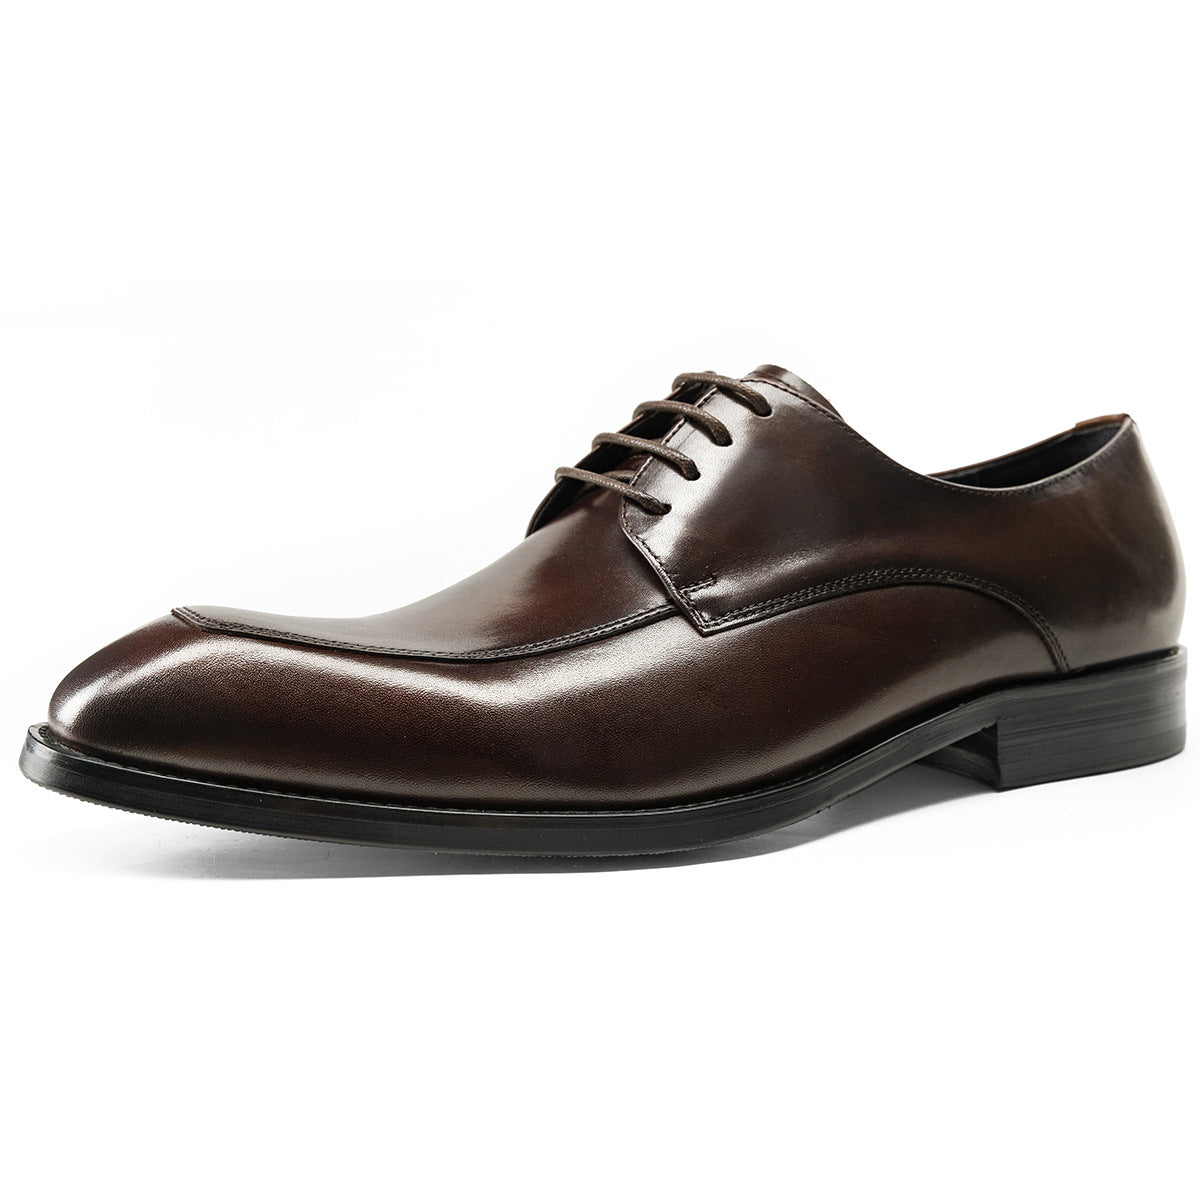 Men's Two-way Dealer-source Business Formal Wear Derby Leather Shoes